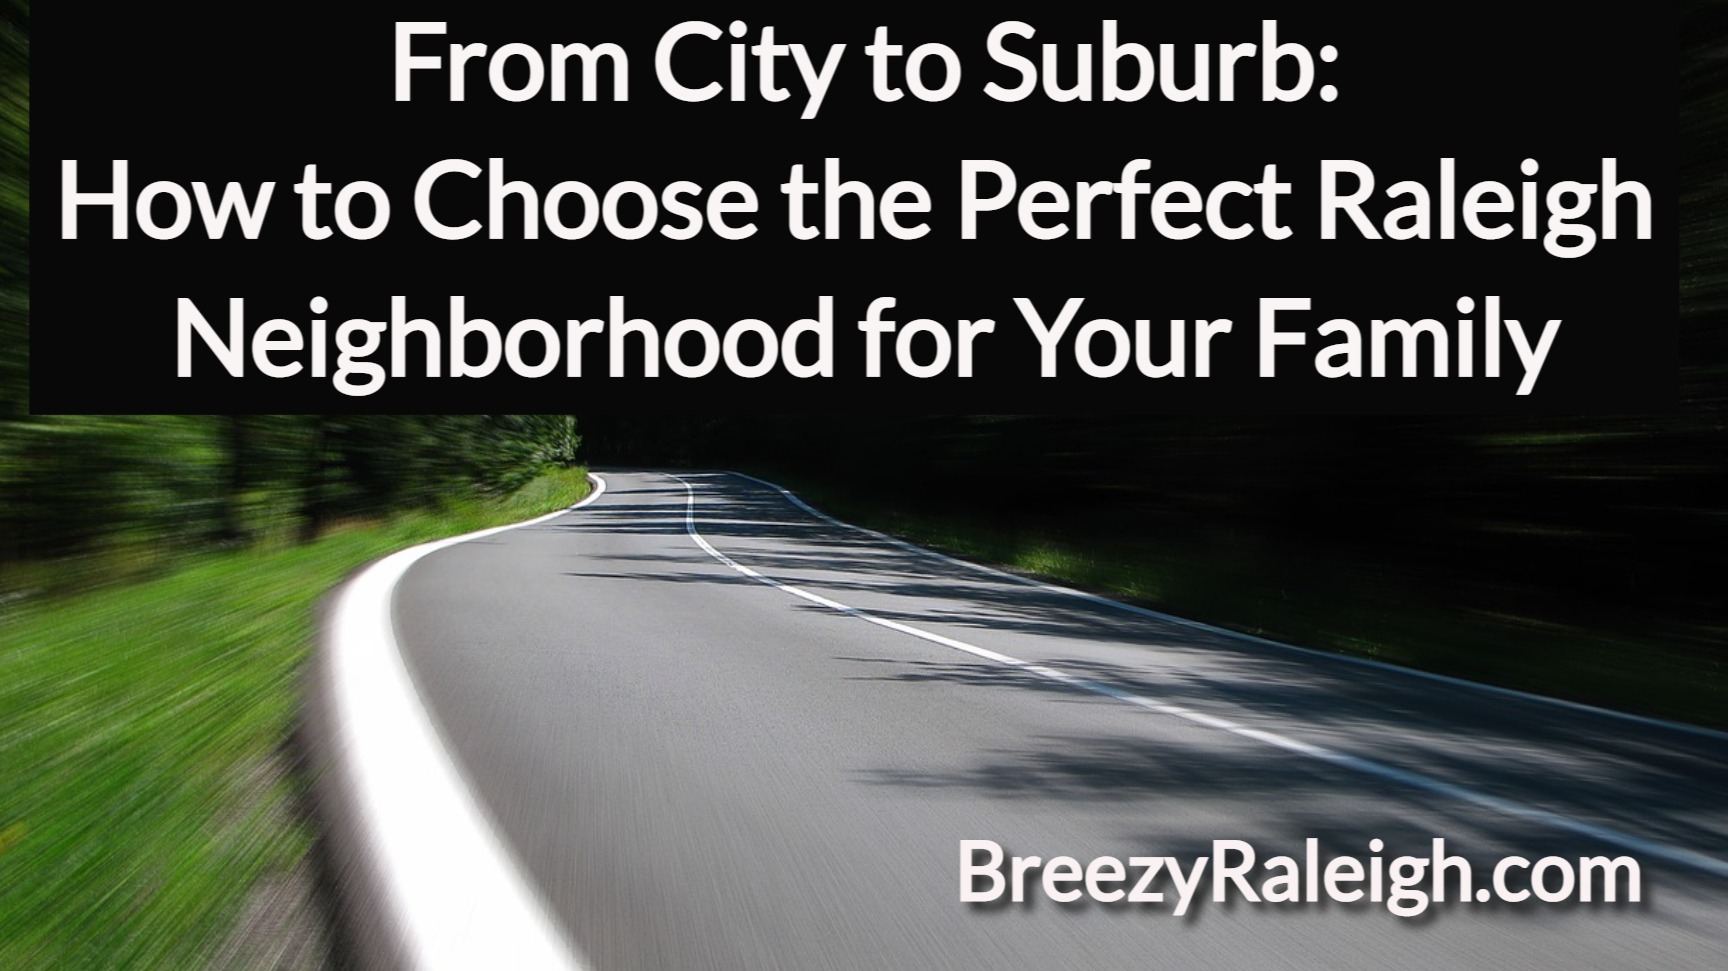 How to choose a Raleigh neighborhood